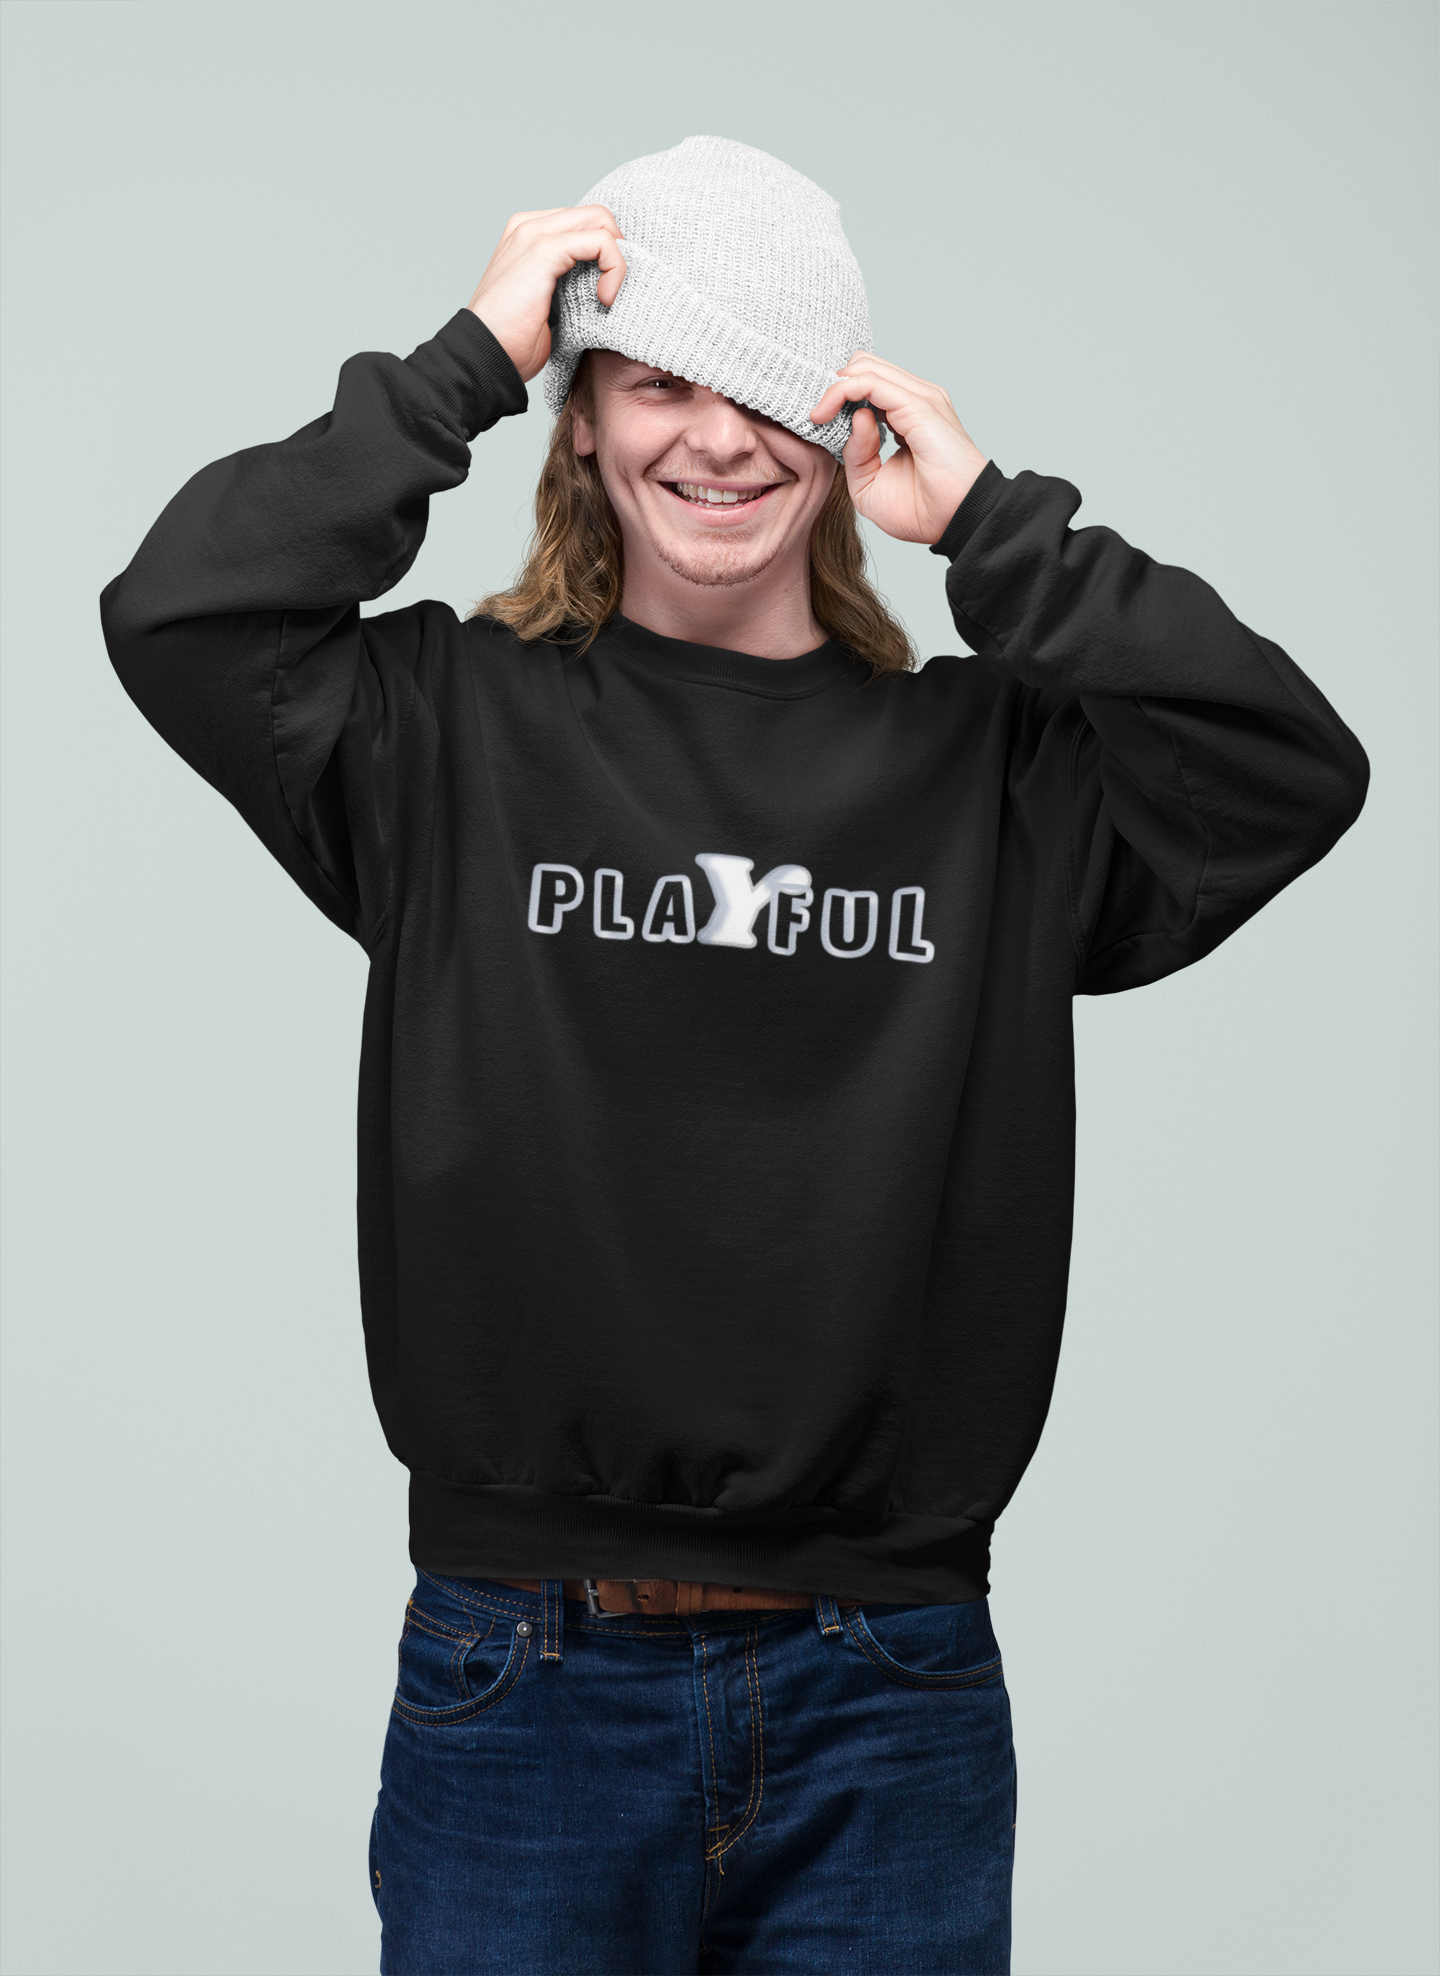 playful Sweater, playful Inspirational Sweatshirt, Positive Quote Shirt For Women, Unisex Sweater